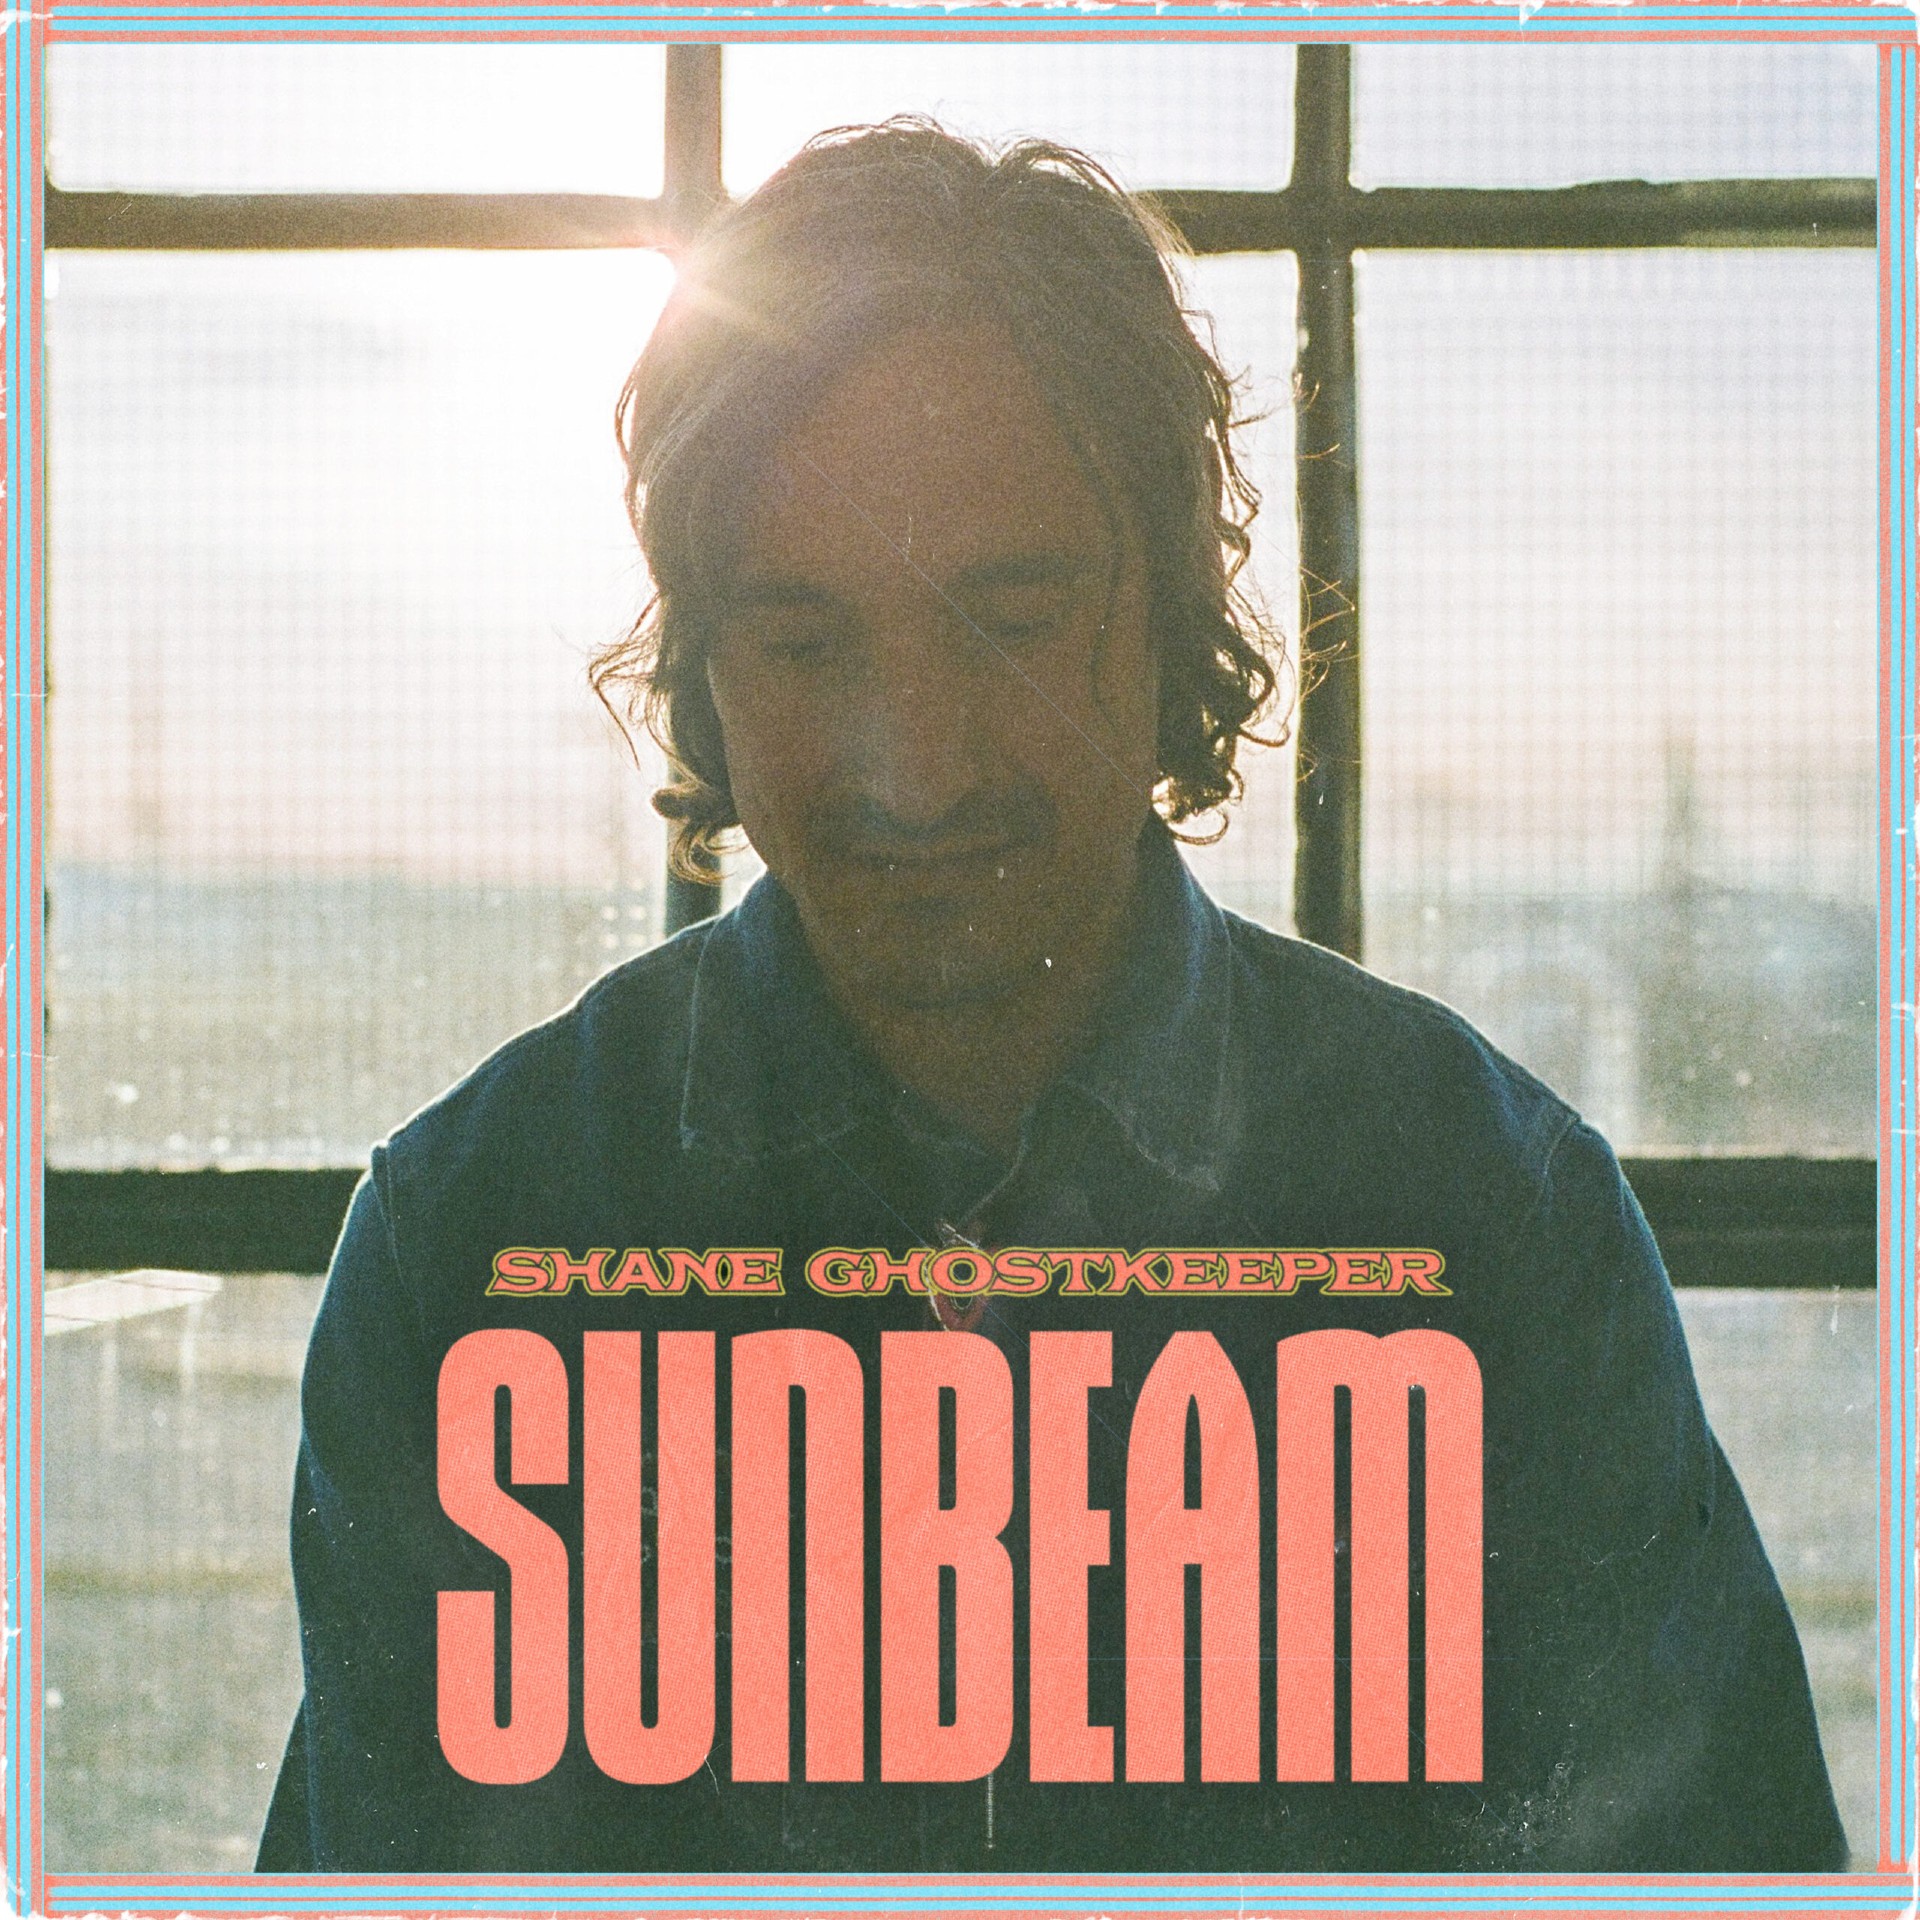 Shane Ghostkeeper “Sunbeam” single artwork